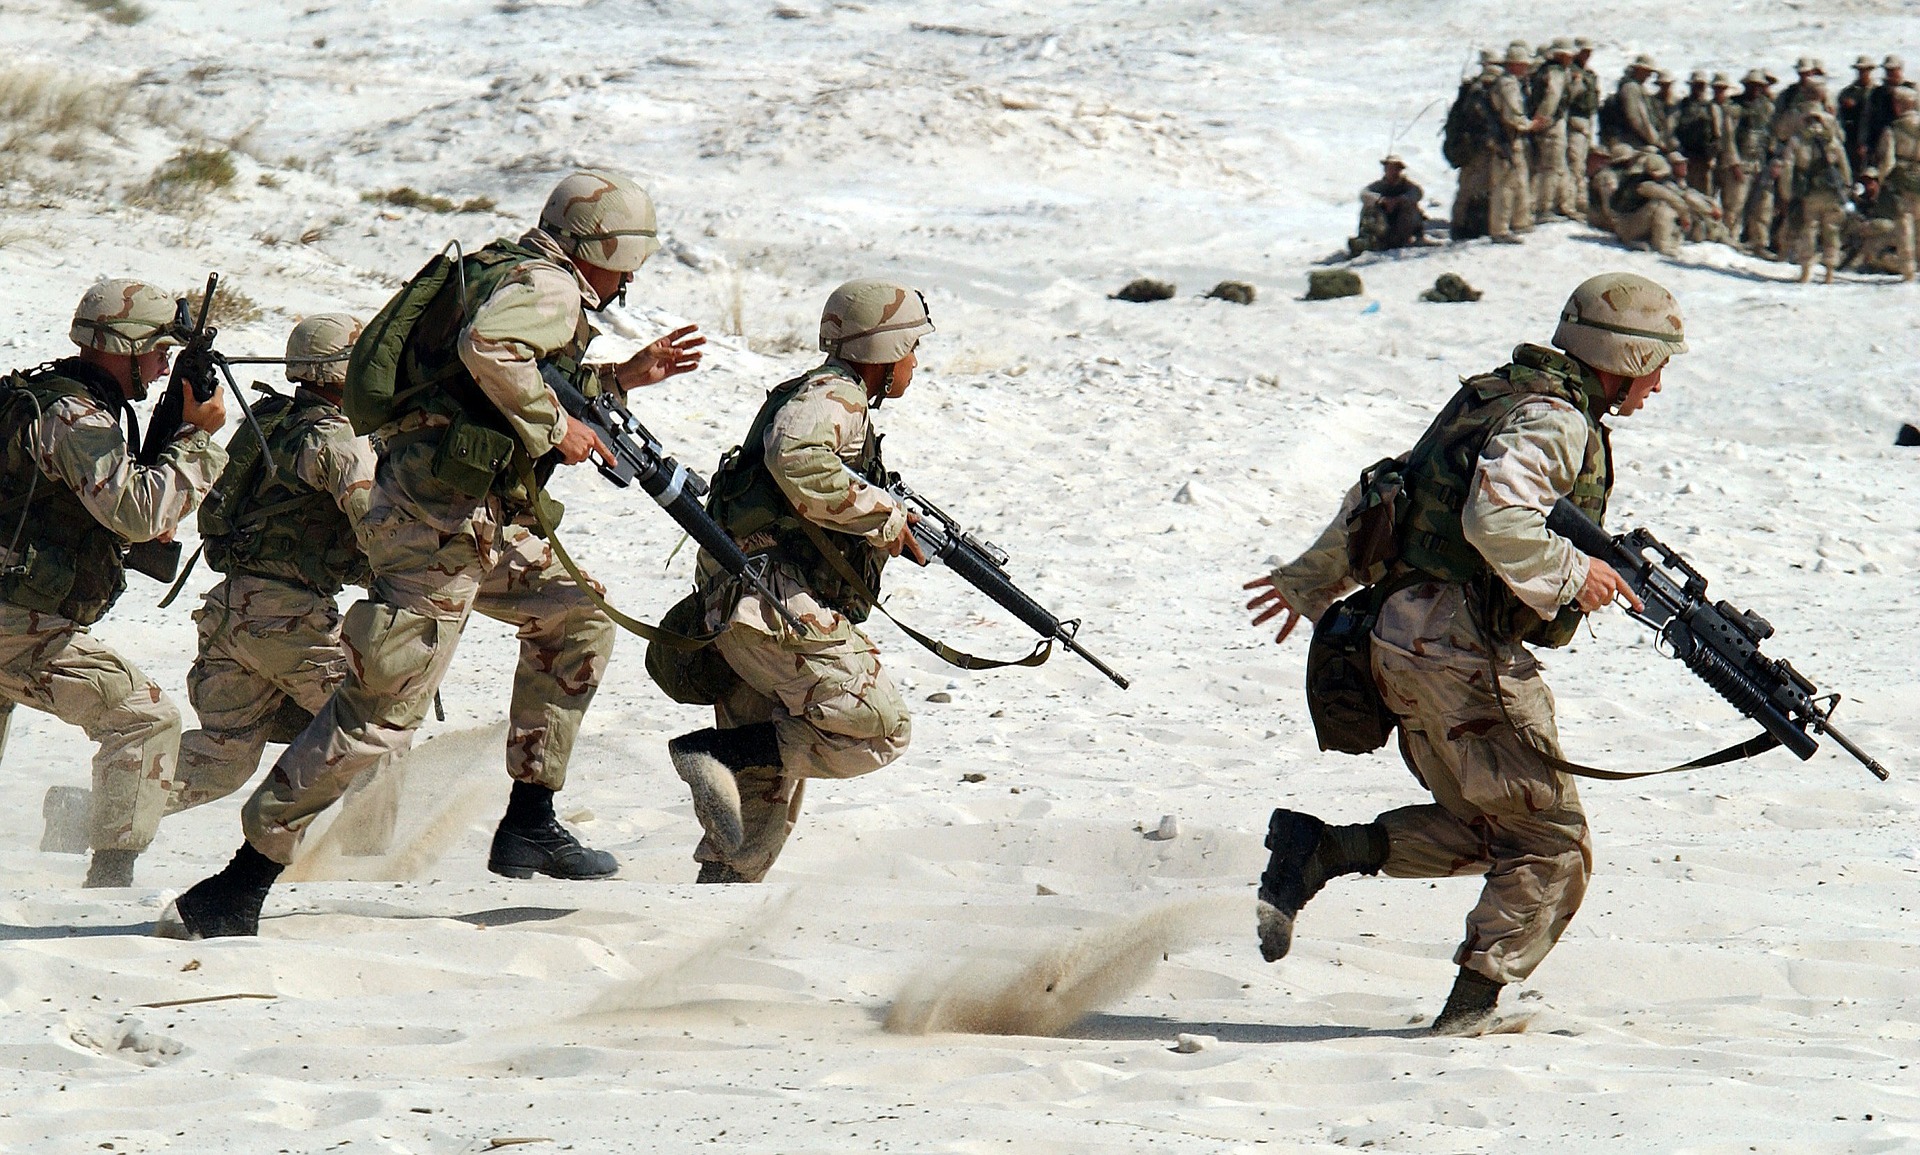 People 1920x1155 men military weapon sand rifles gun boys with guns helmet running uniform usmc marines United States Marine Corps